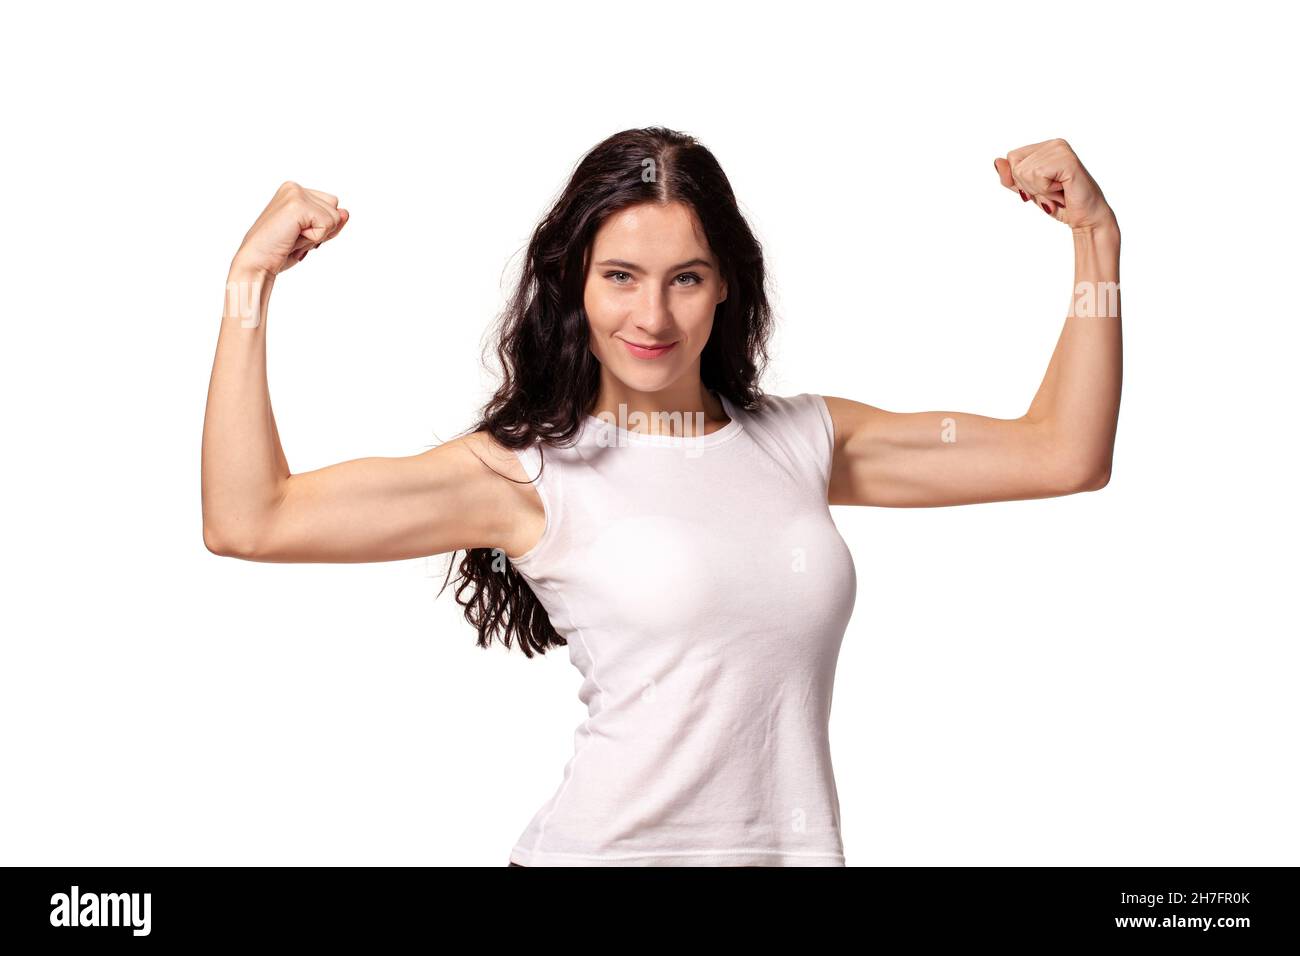 634 Woman Shows Biceps Stock Photos - Free & Royalty-Free Stock